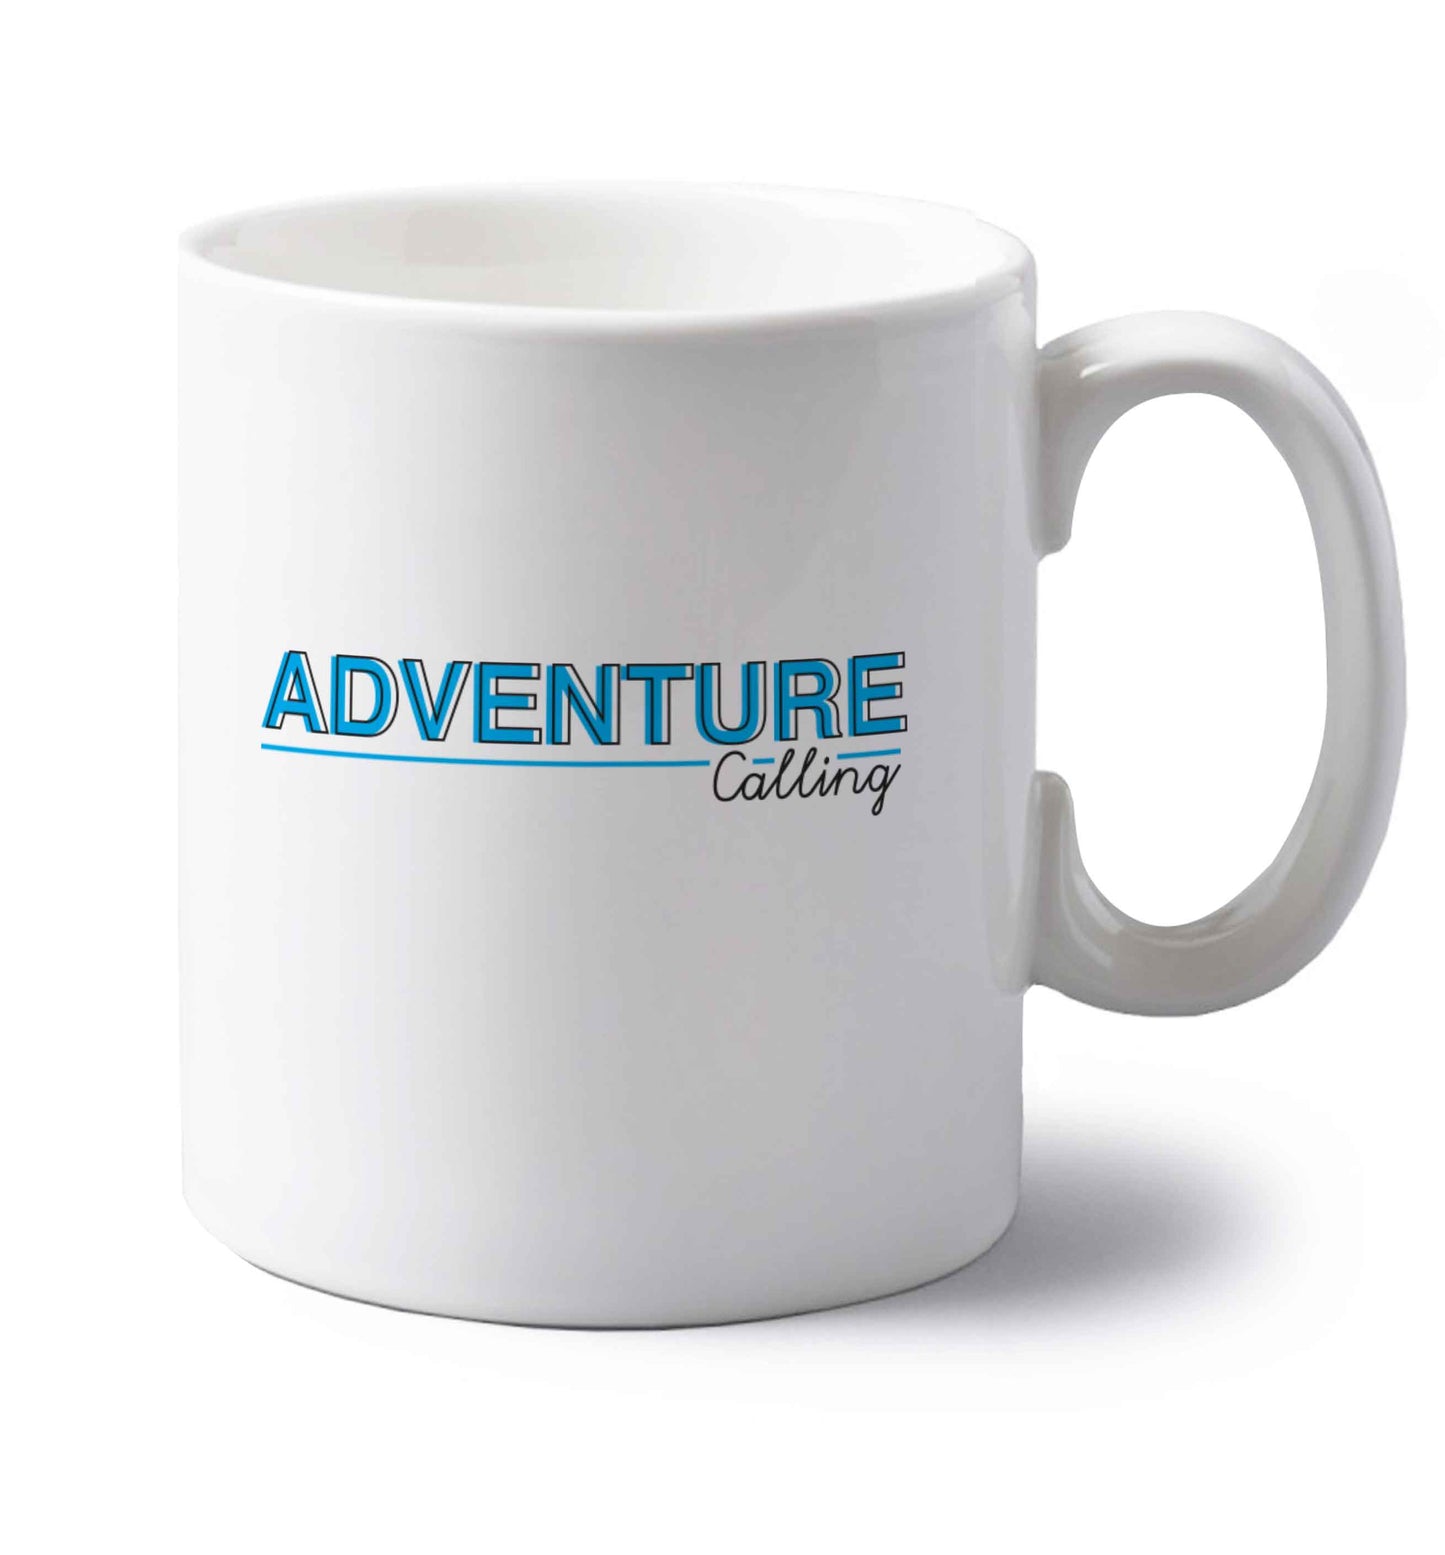 Adventure calling left handed white ceramic mug 